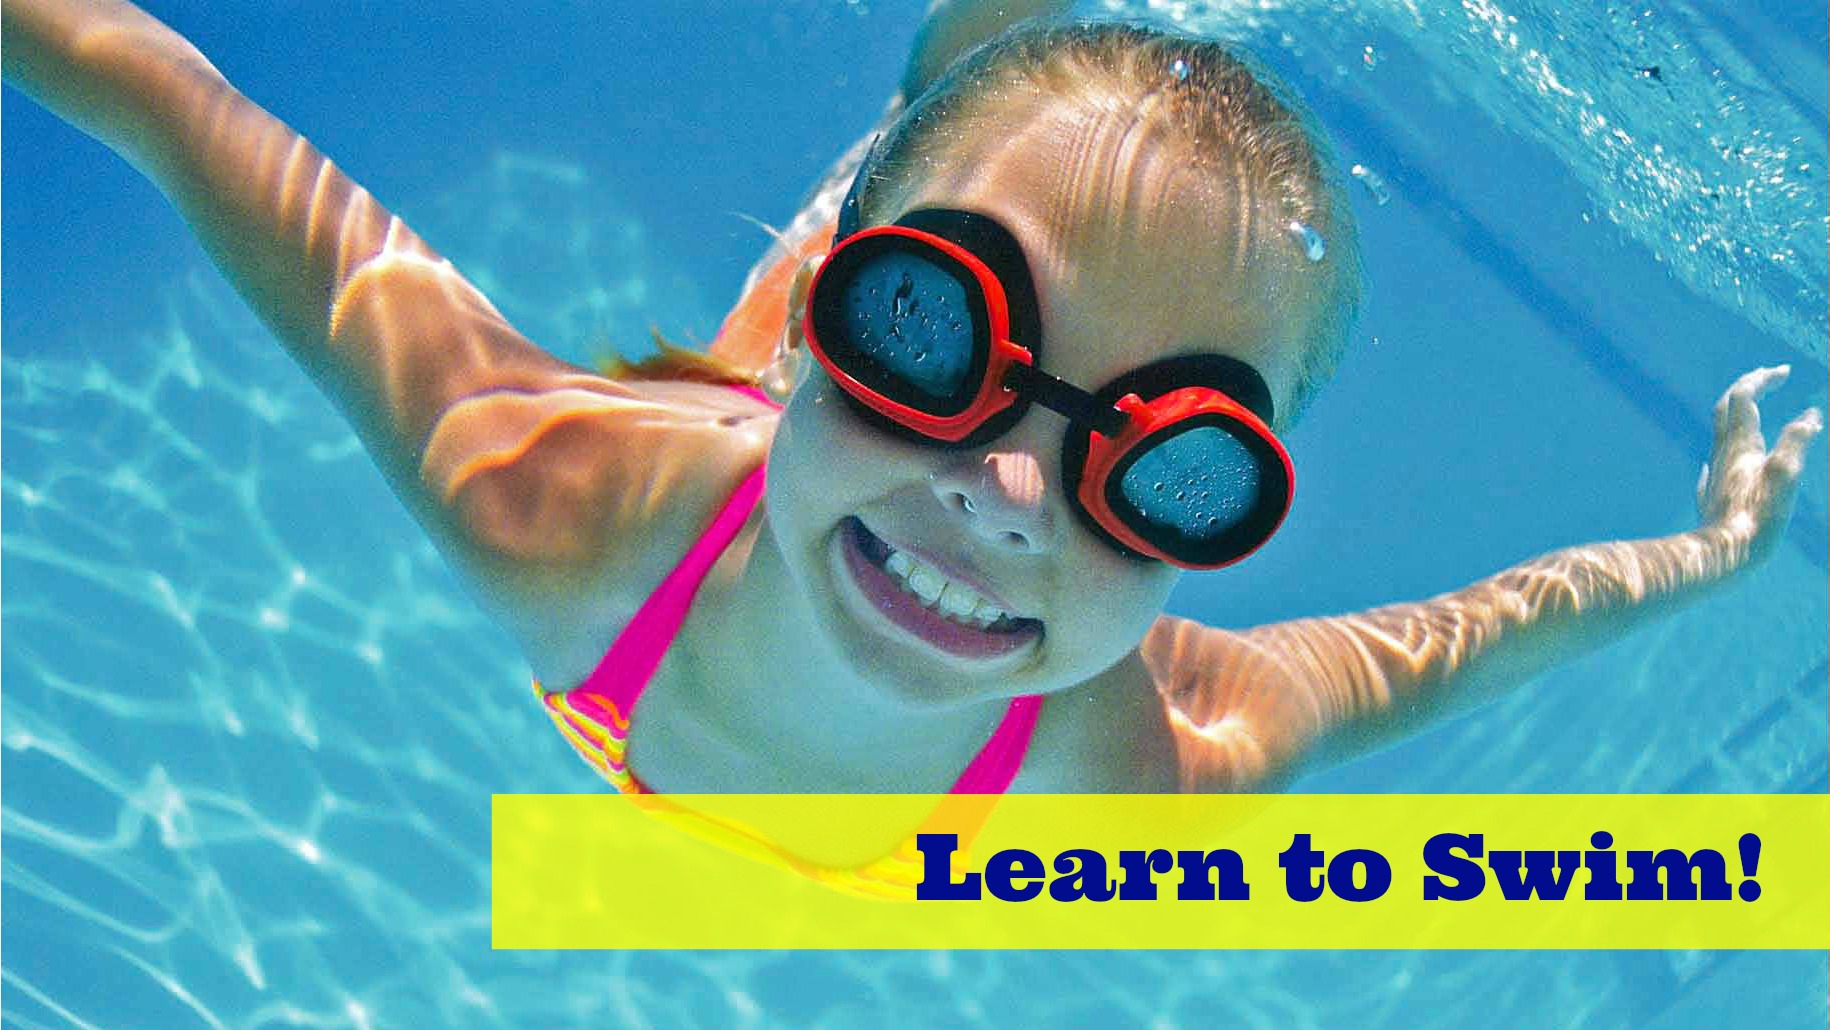 Learn to Swim - 16x9.jpg